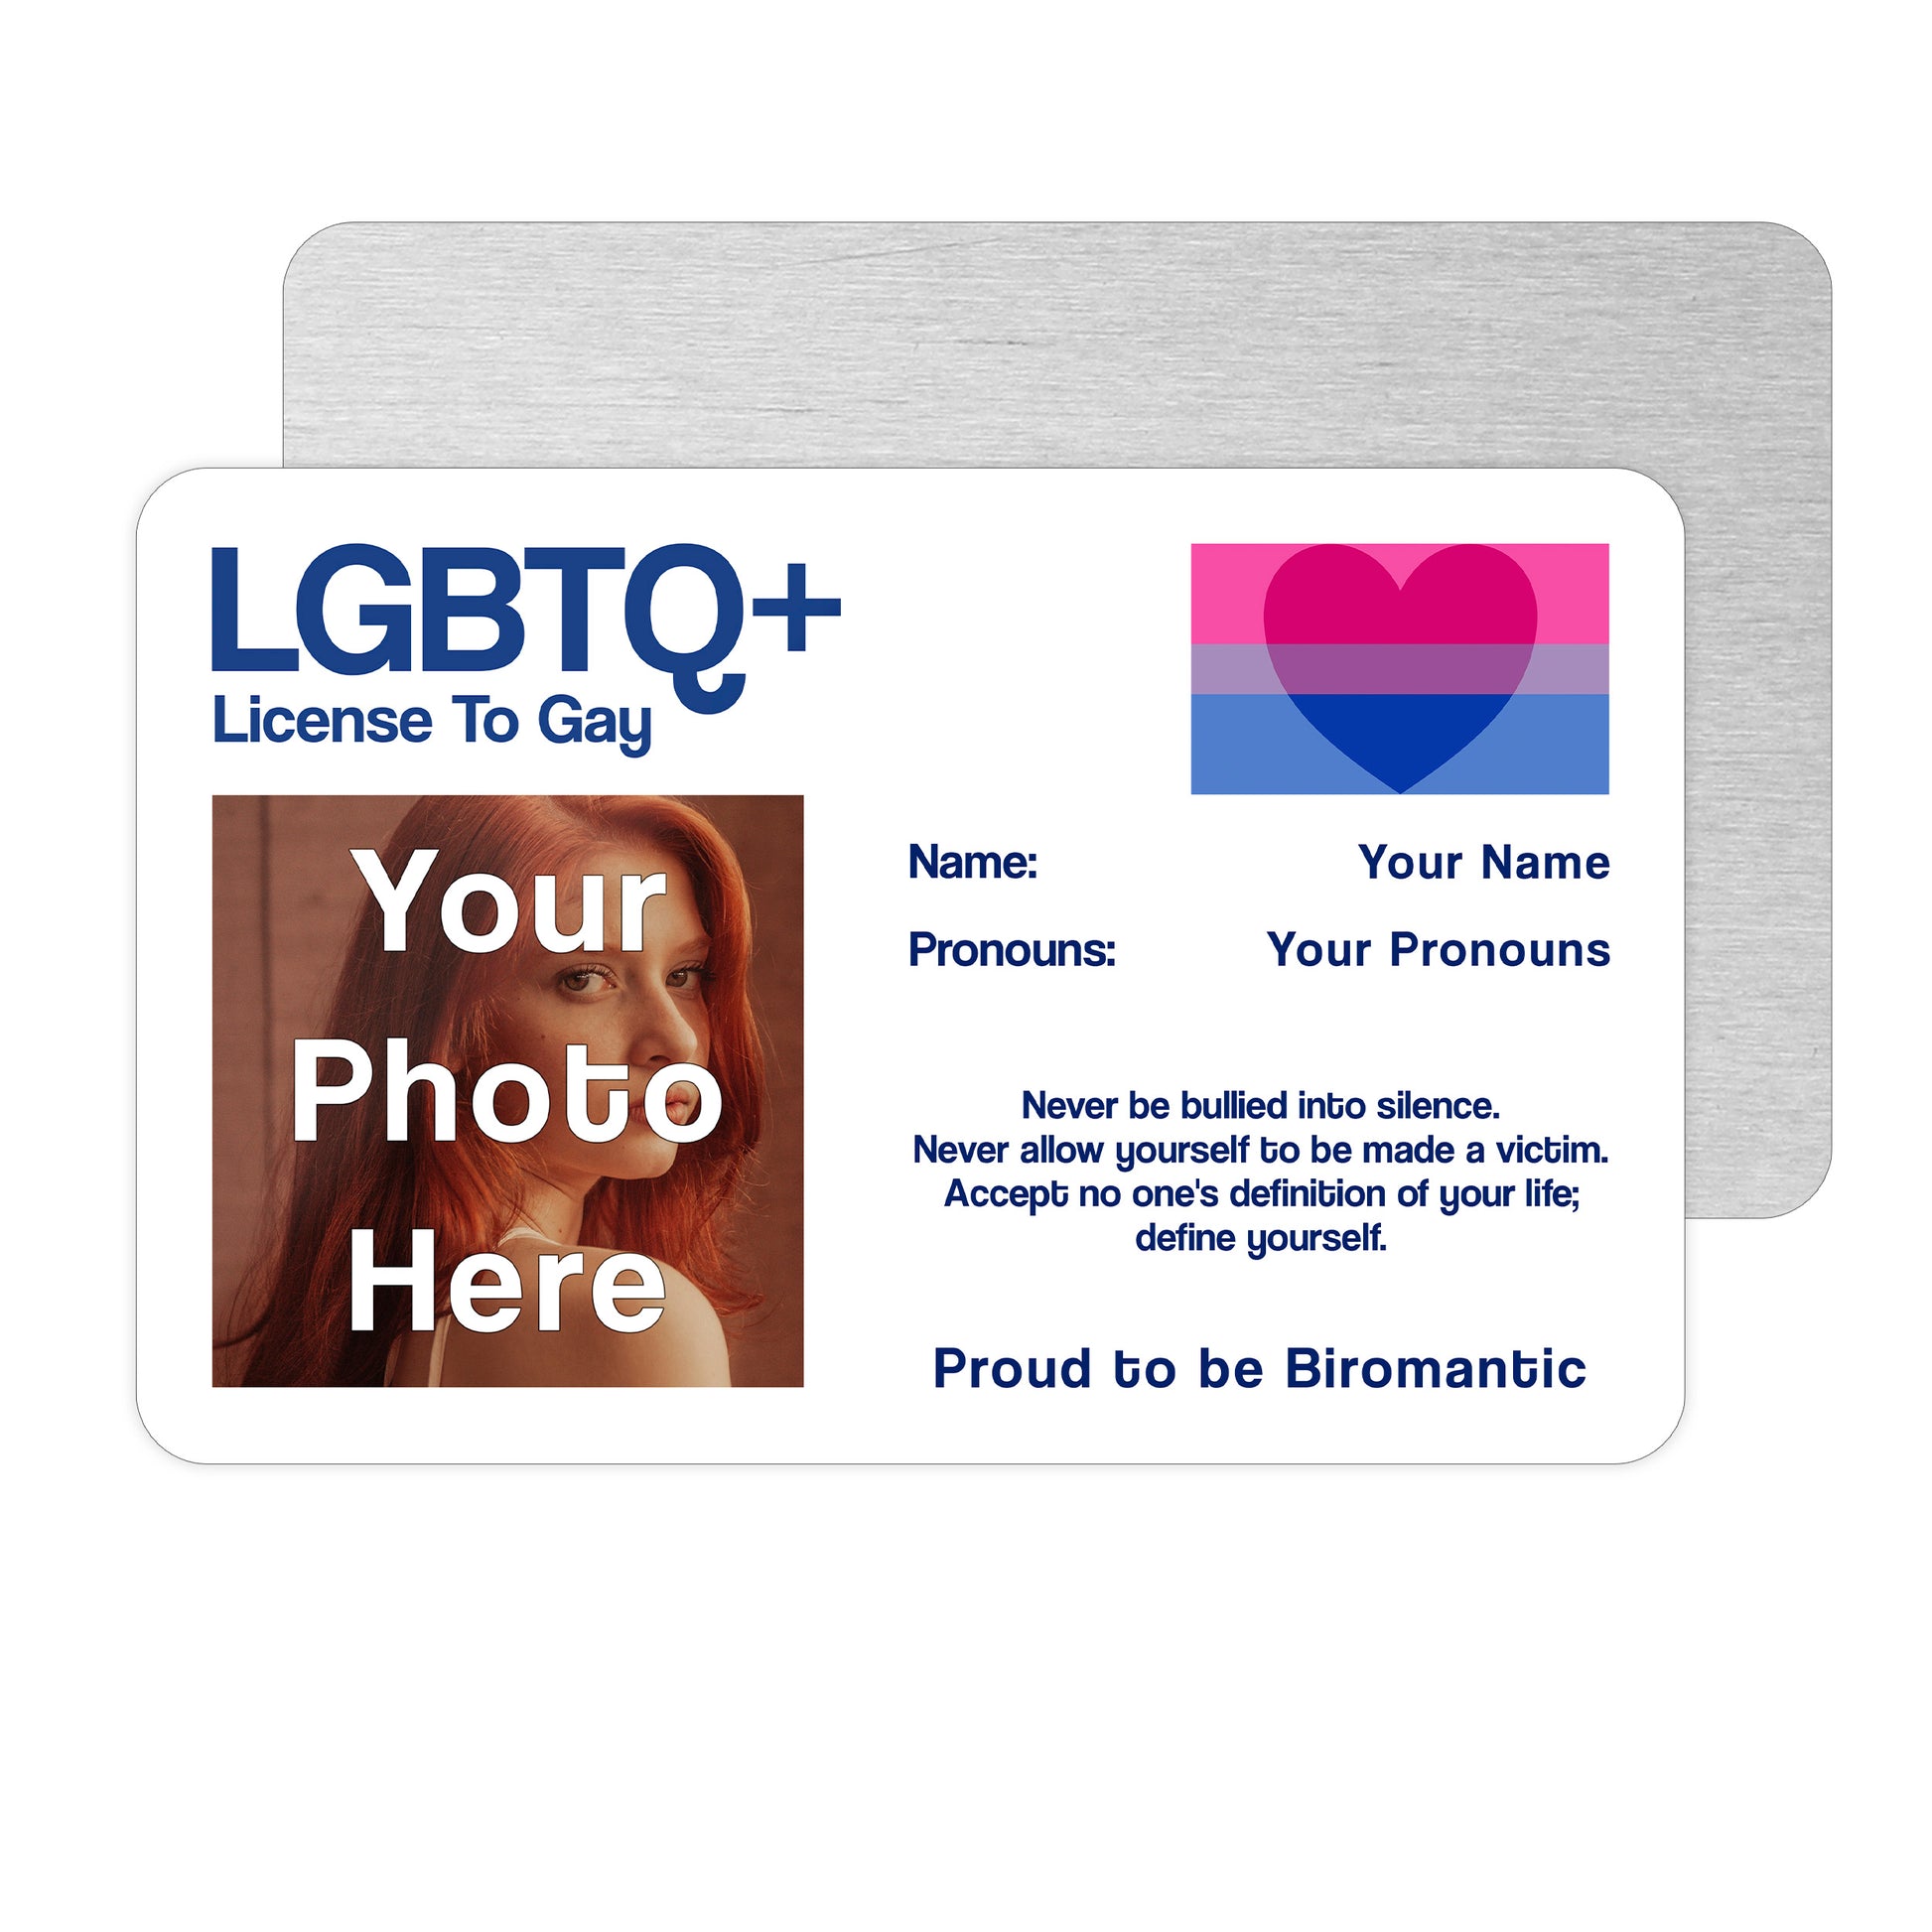 Biromantic license to gay